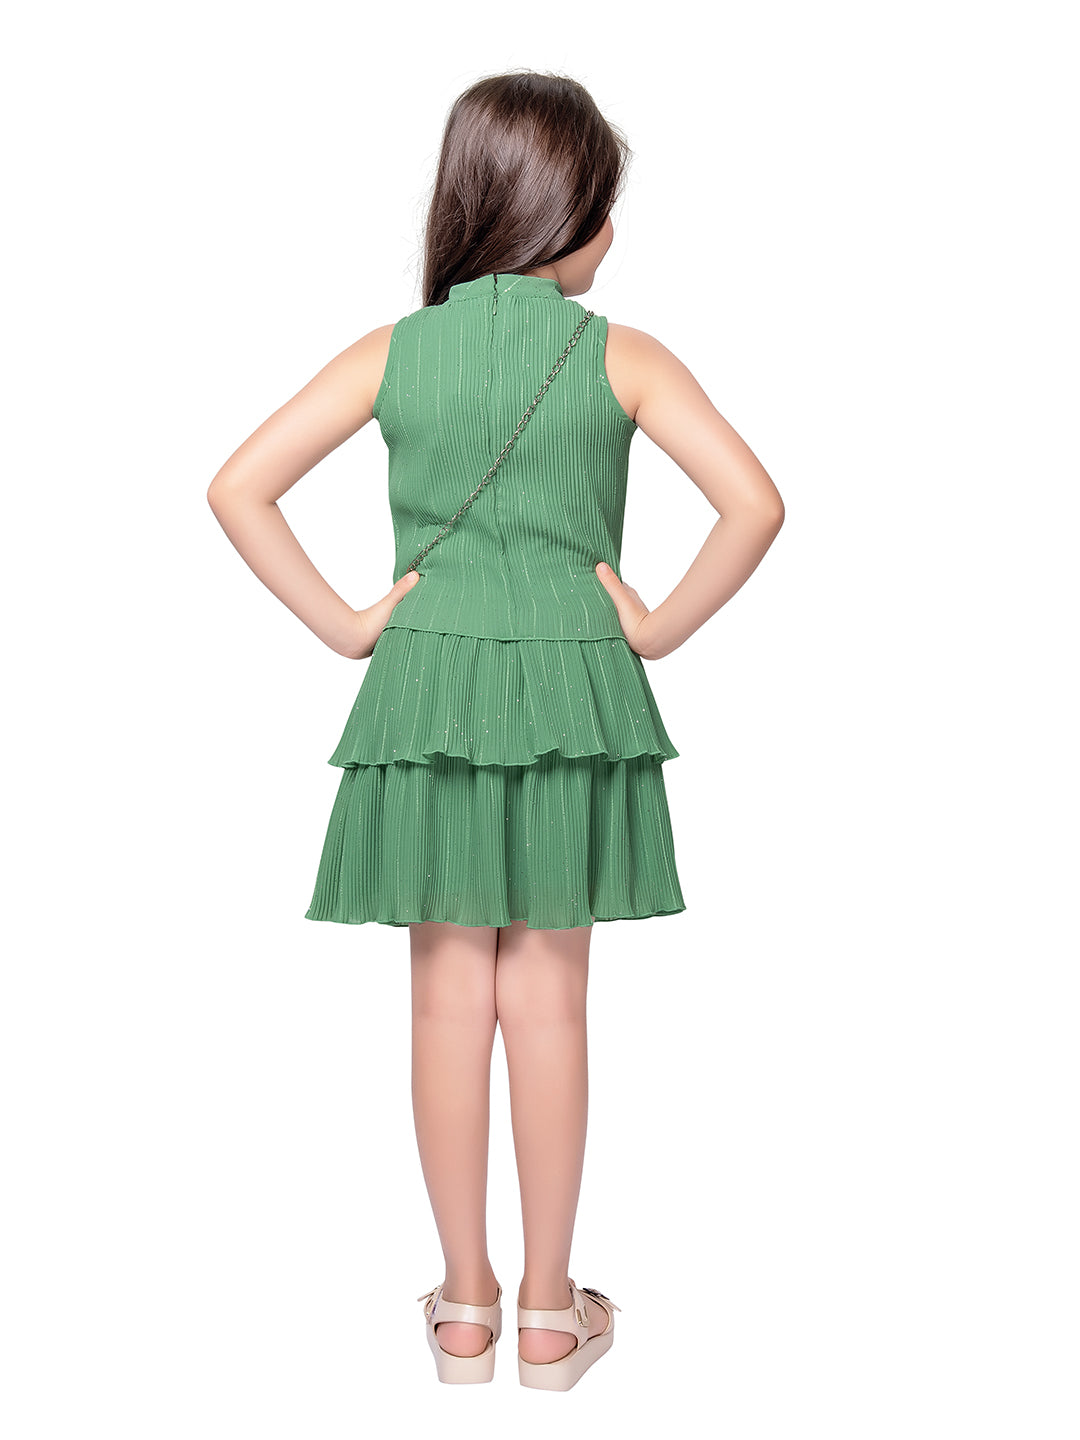 Green Colored Skirt Top Set - 2209 Green